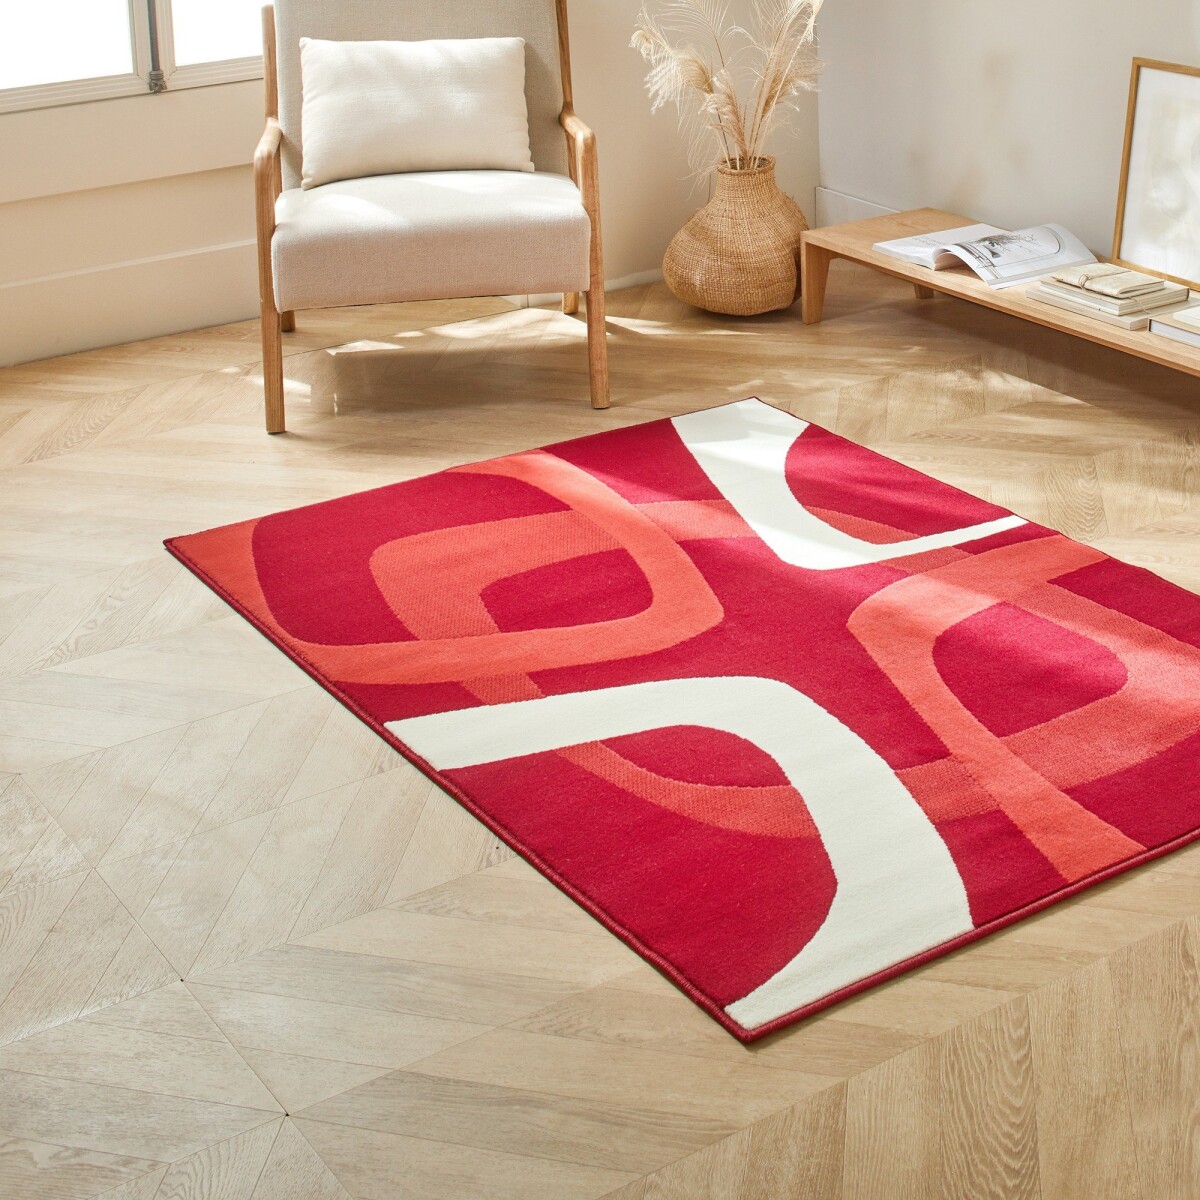 Blancheporte Obdélníkový koberec s retro motivem bordó 60x110cm